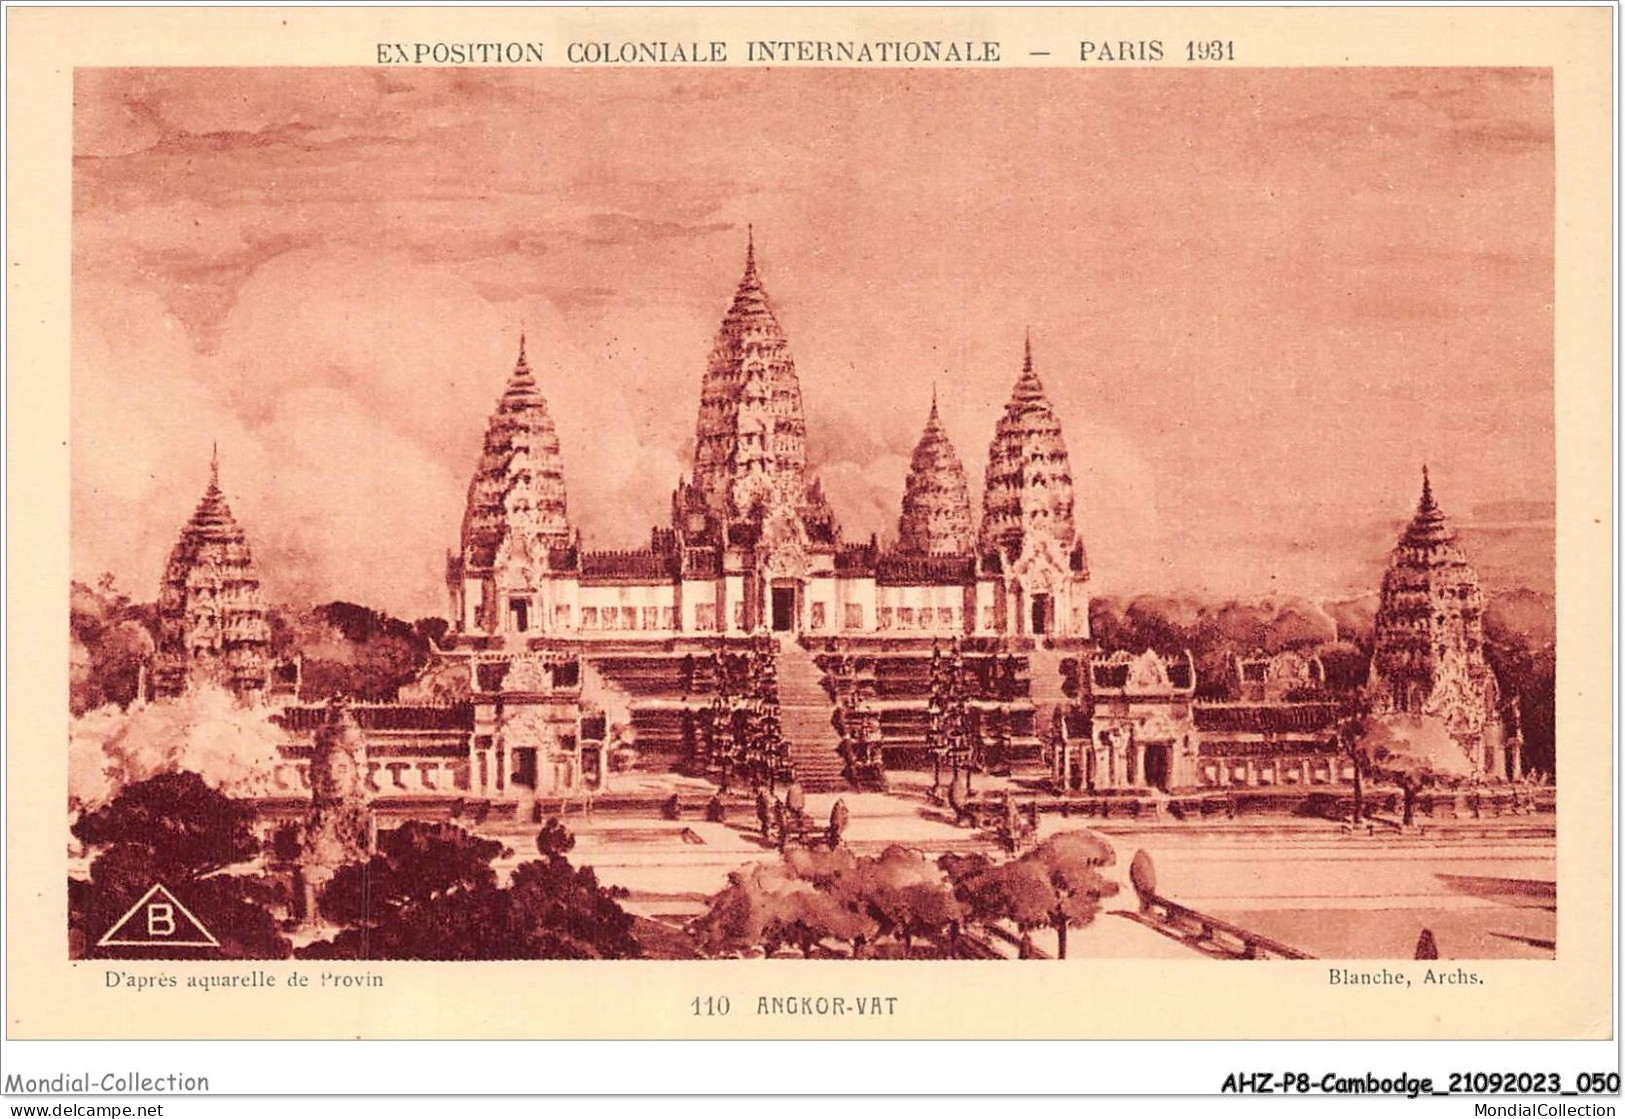 AHZP8-CAMBODGE-0708 - EXPOSITION COLONIALE INTERNATIONALE - PARIS 1931 - ANGKOR-VAT - Kambodscha